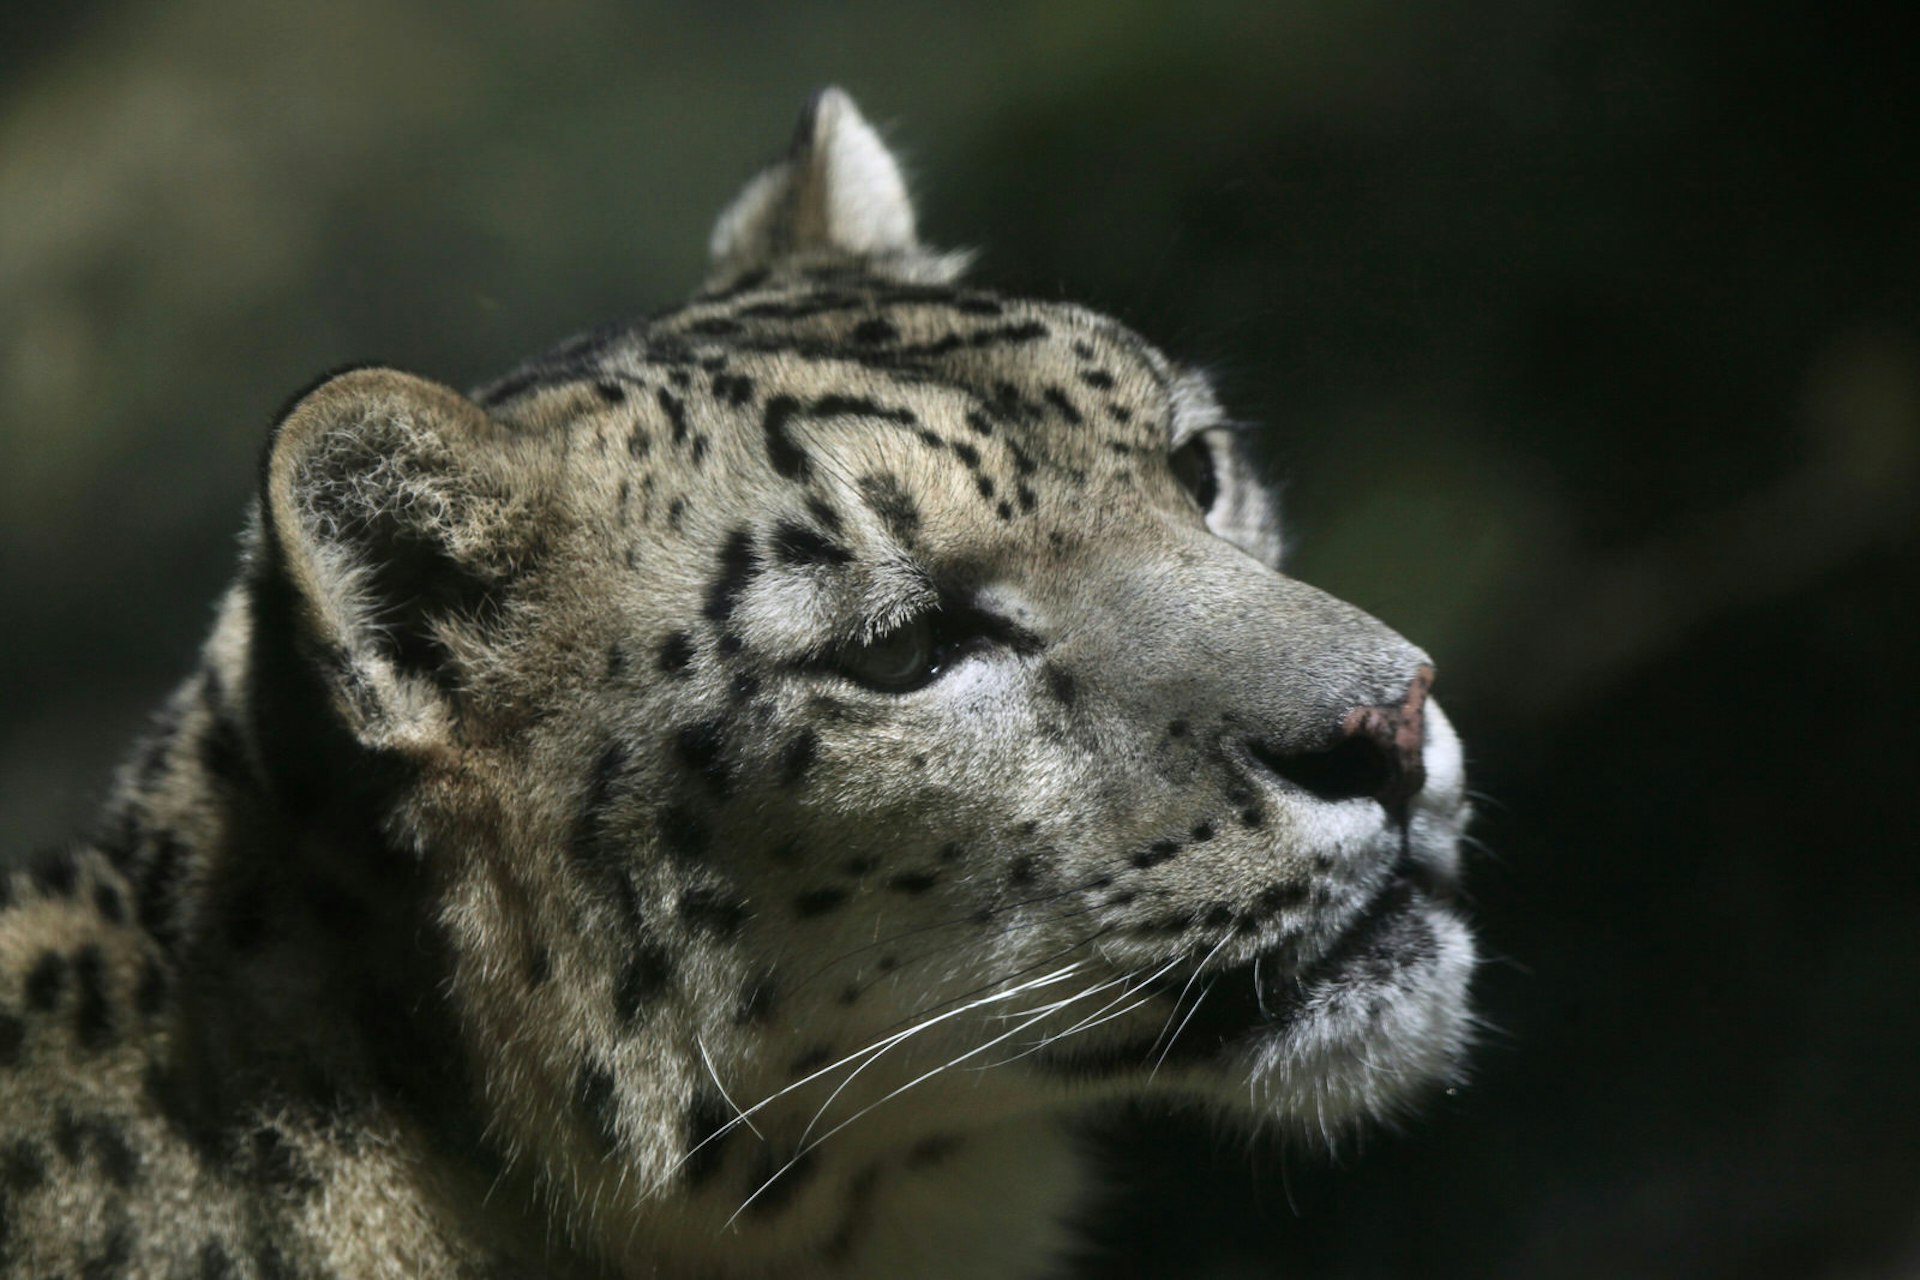 A closeup portrait shot of the head of a white snow leopard